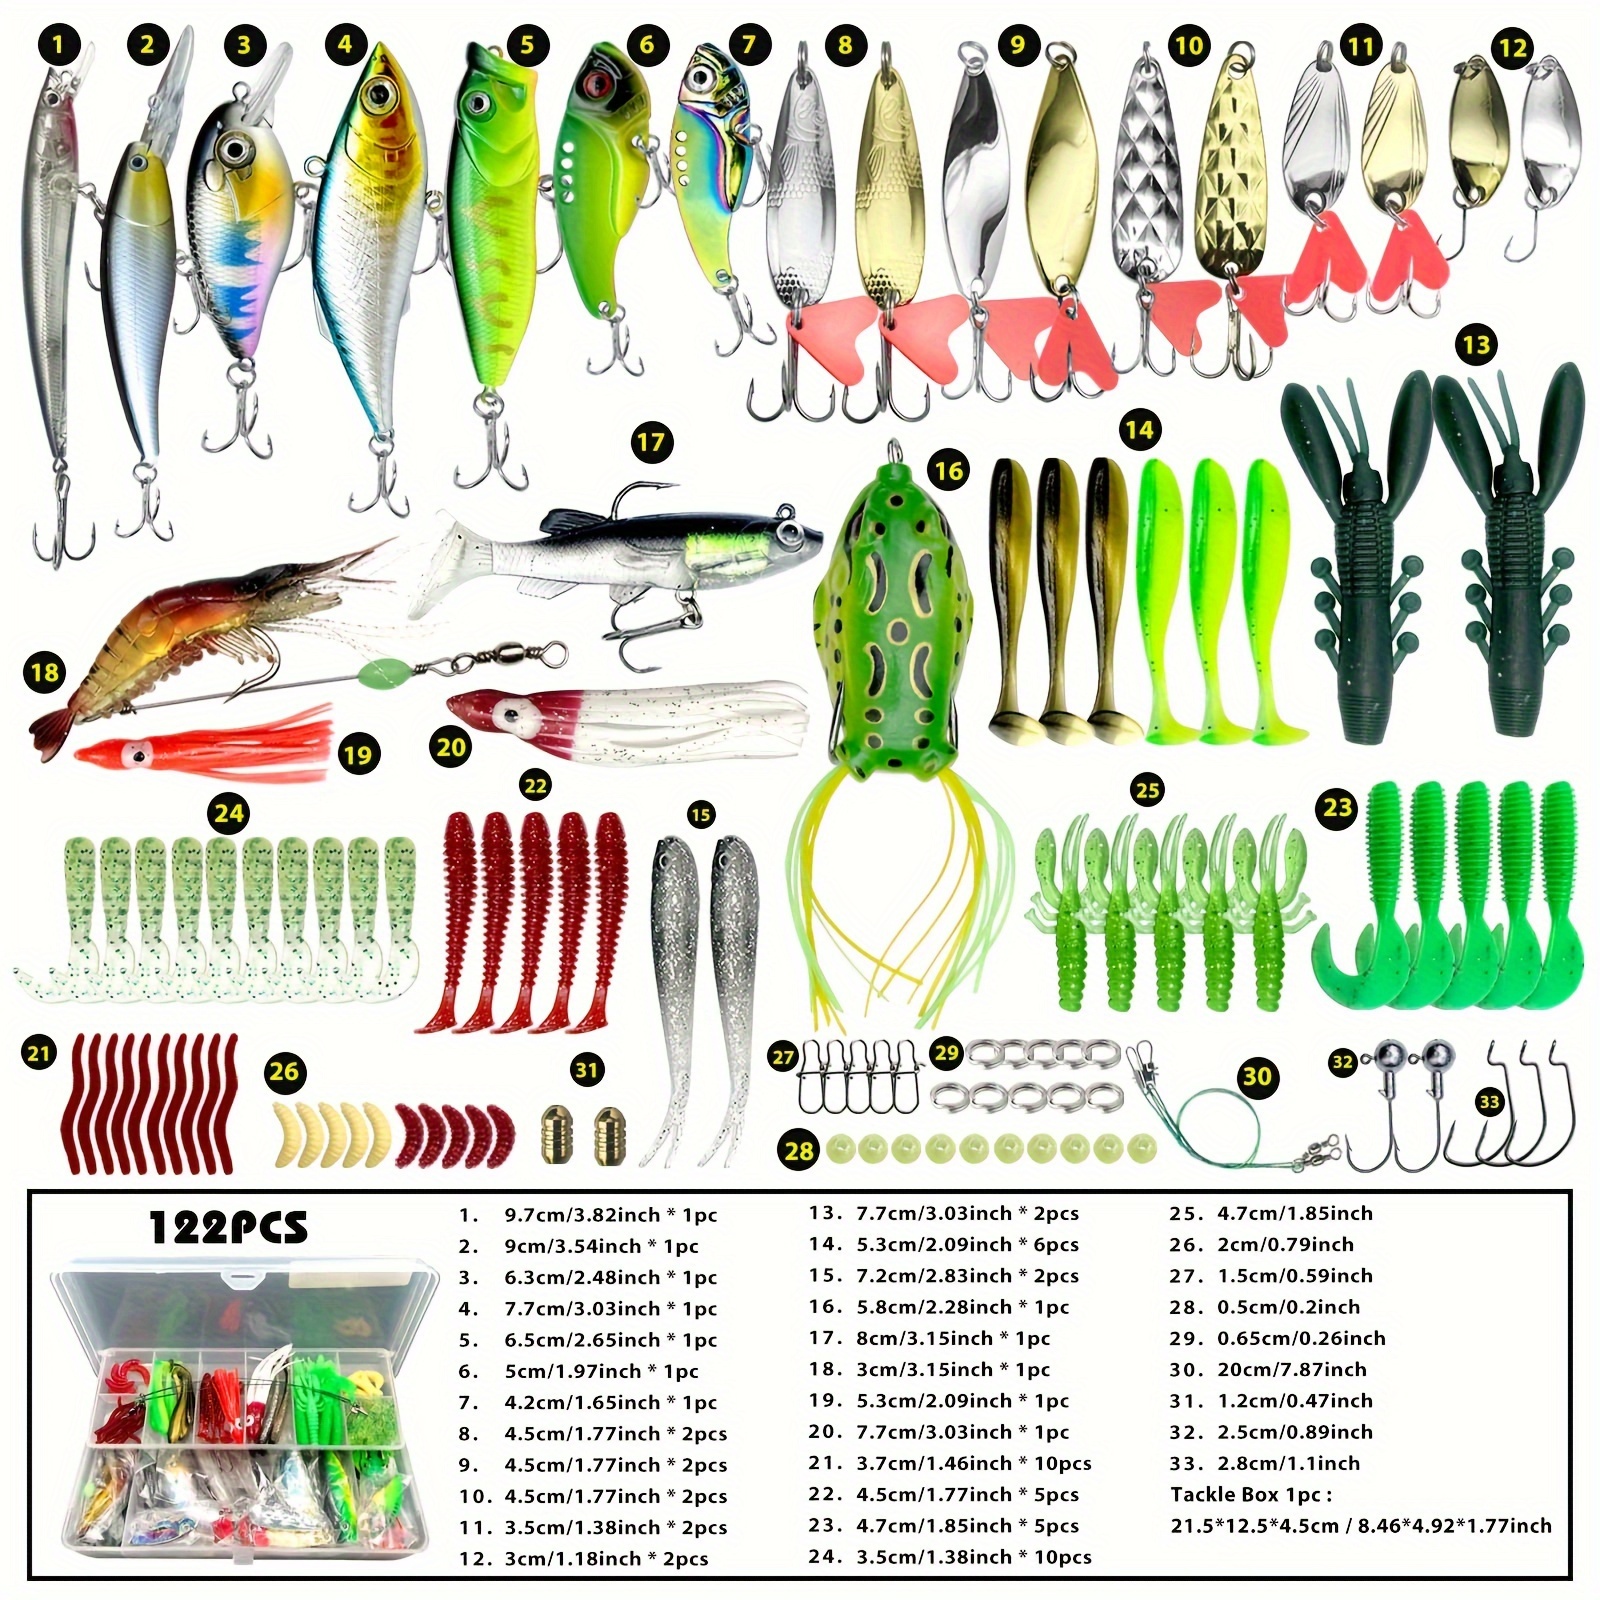 Ultimate Fishing Tool Kit, Fishing Smarter, Snell Tool Kit